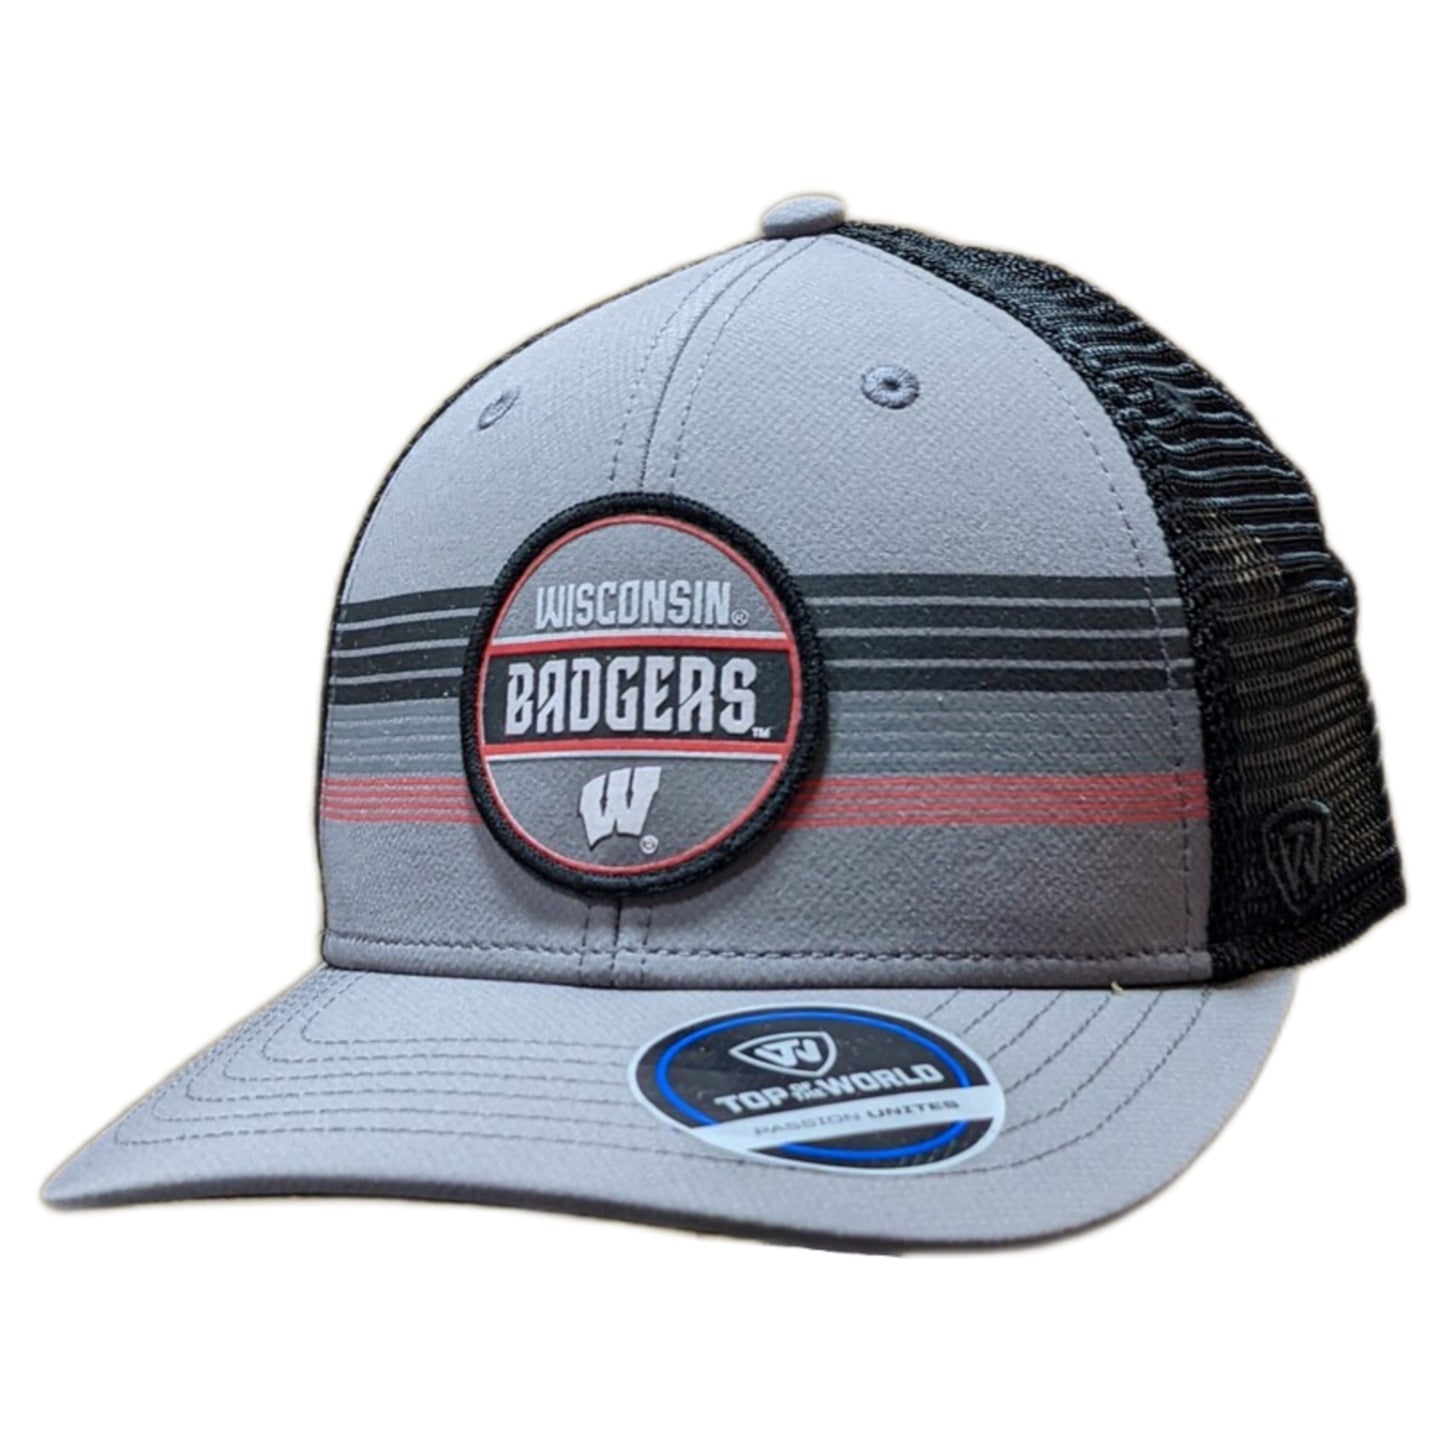 Wisconsin Badgers Top of the World Gray/Black Trucker Adjustable Snapback Hat